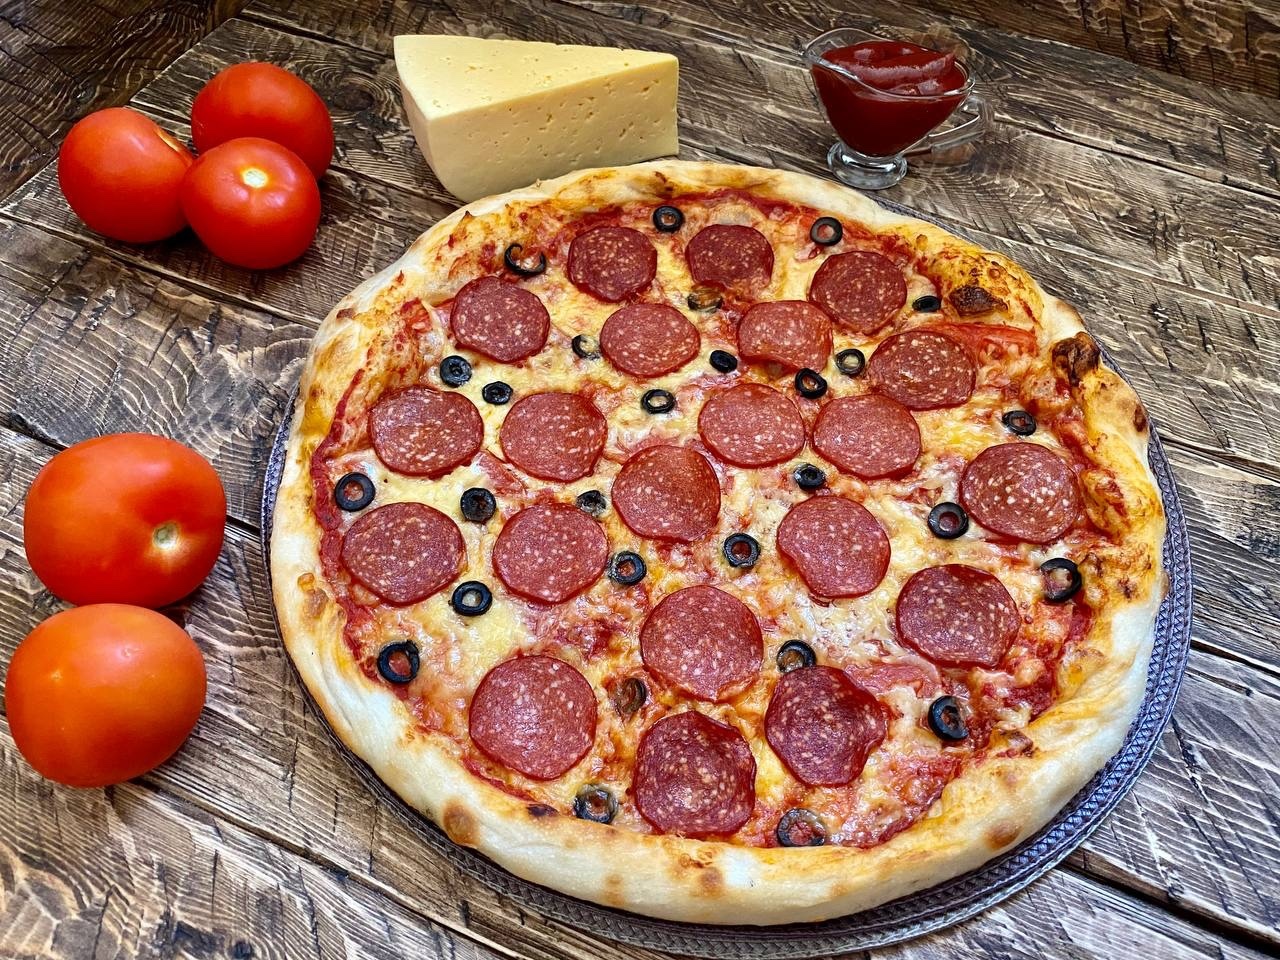 сколько стоит пицца пепперони в новосибирске фото 107